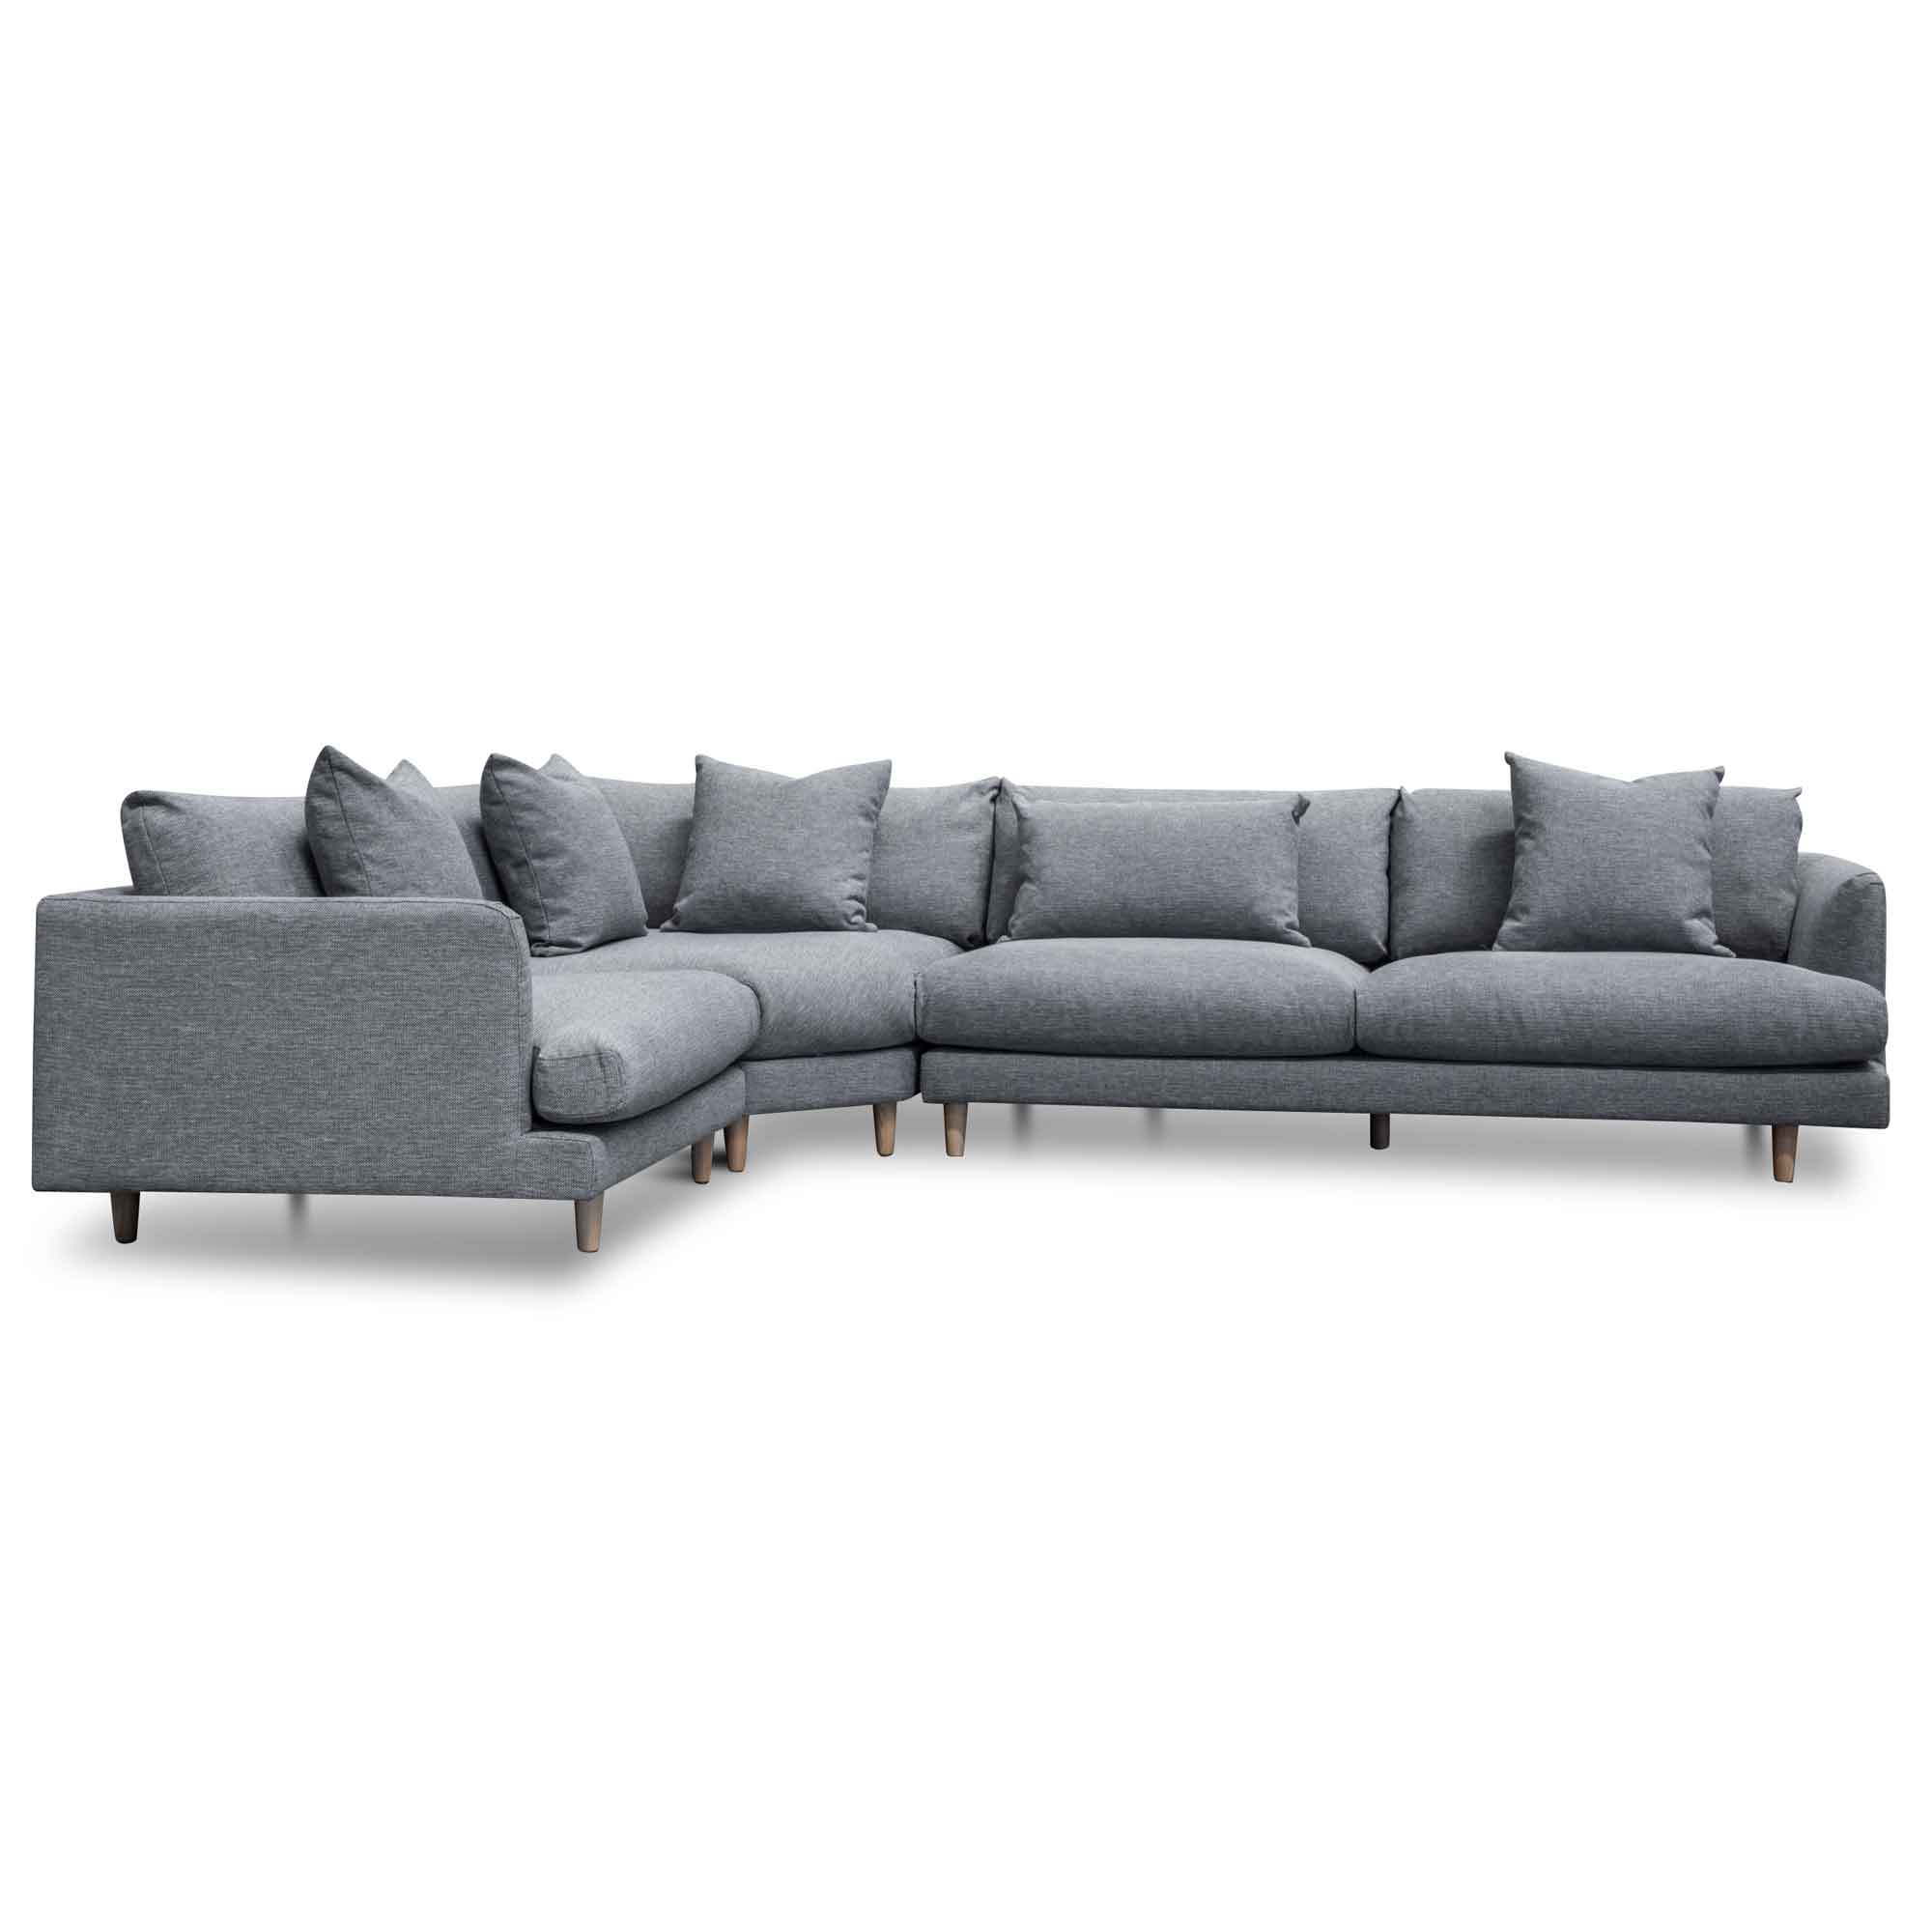 Piper Left Return Modular Sofa - Graphite Grey